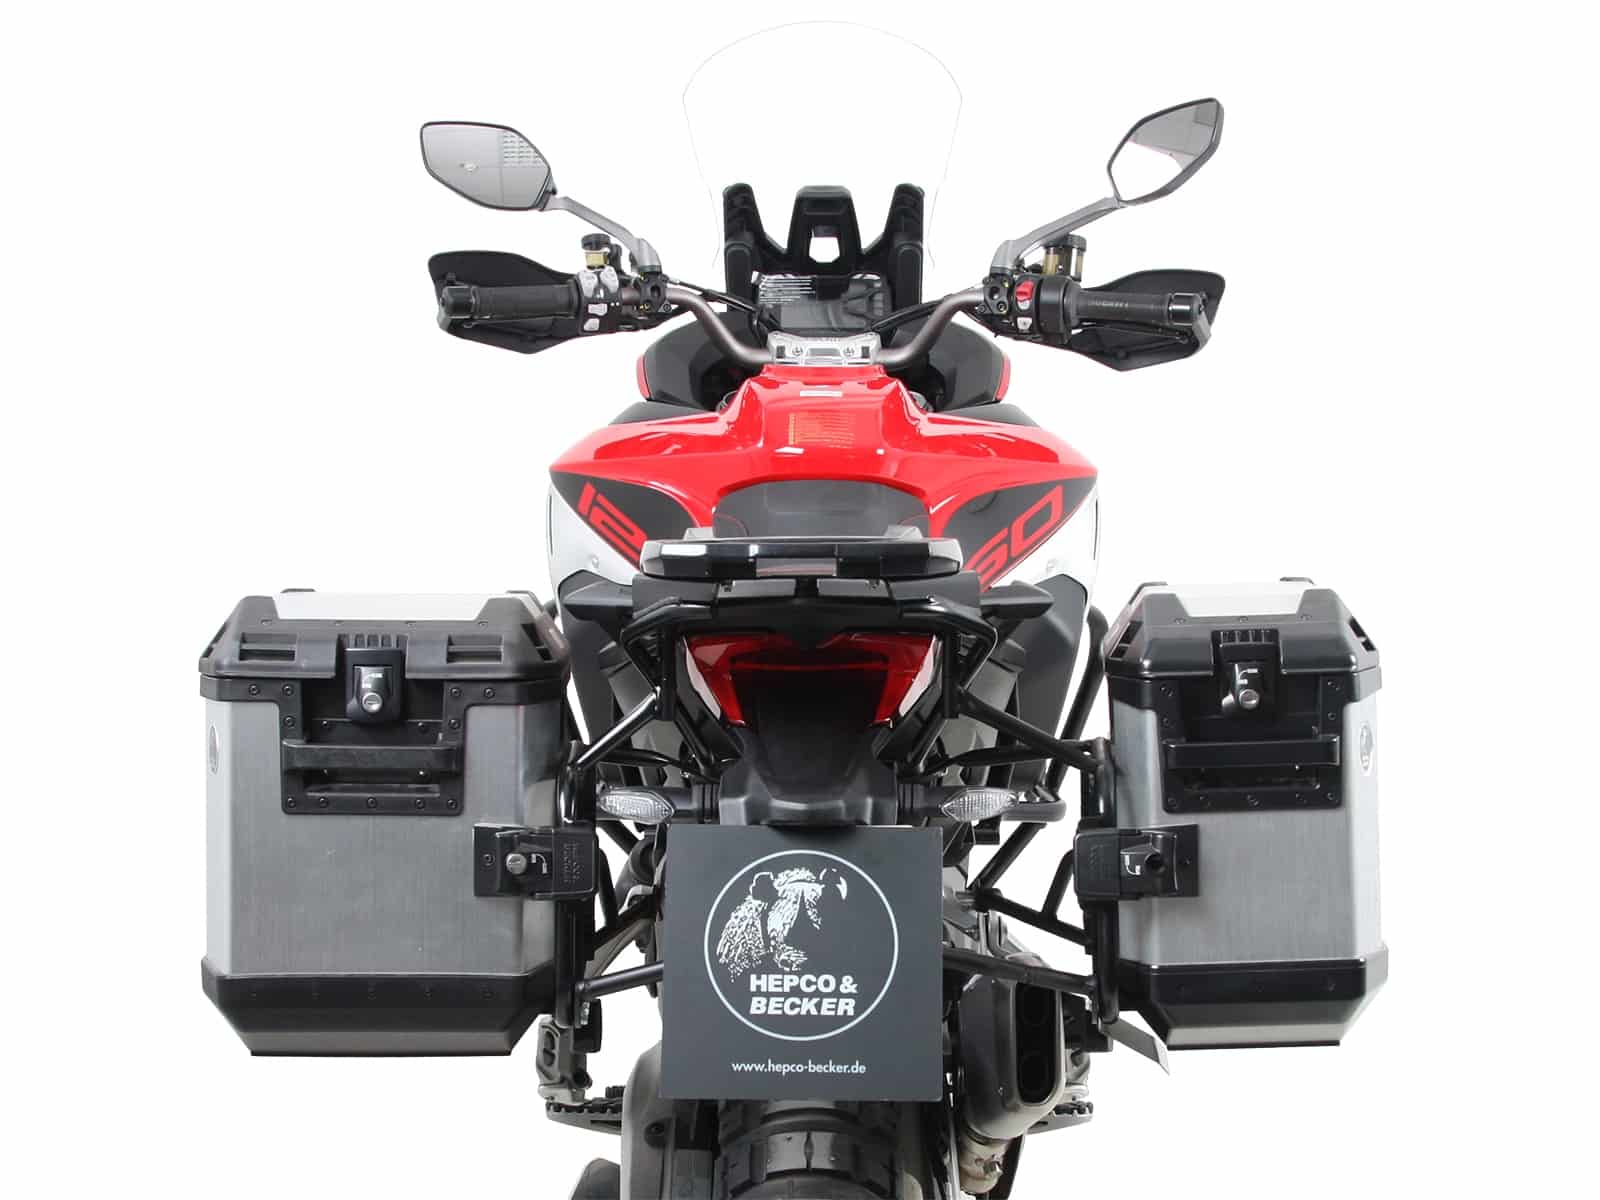 Sidecarrier permanent mounted black for Ducati Multistrada 1260 Enduro (2019-)